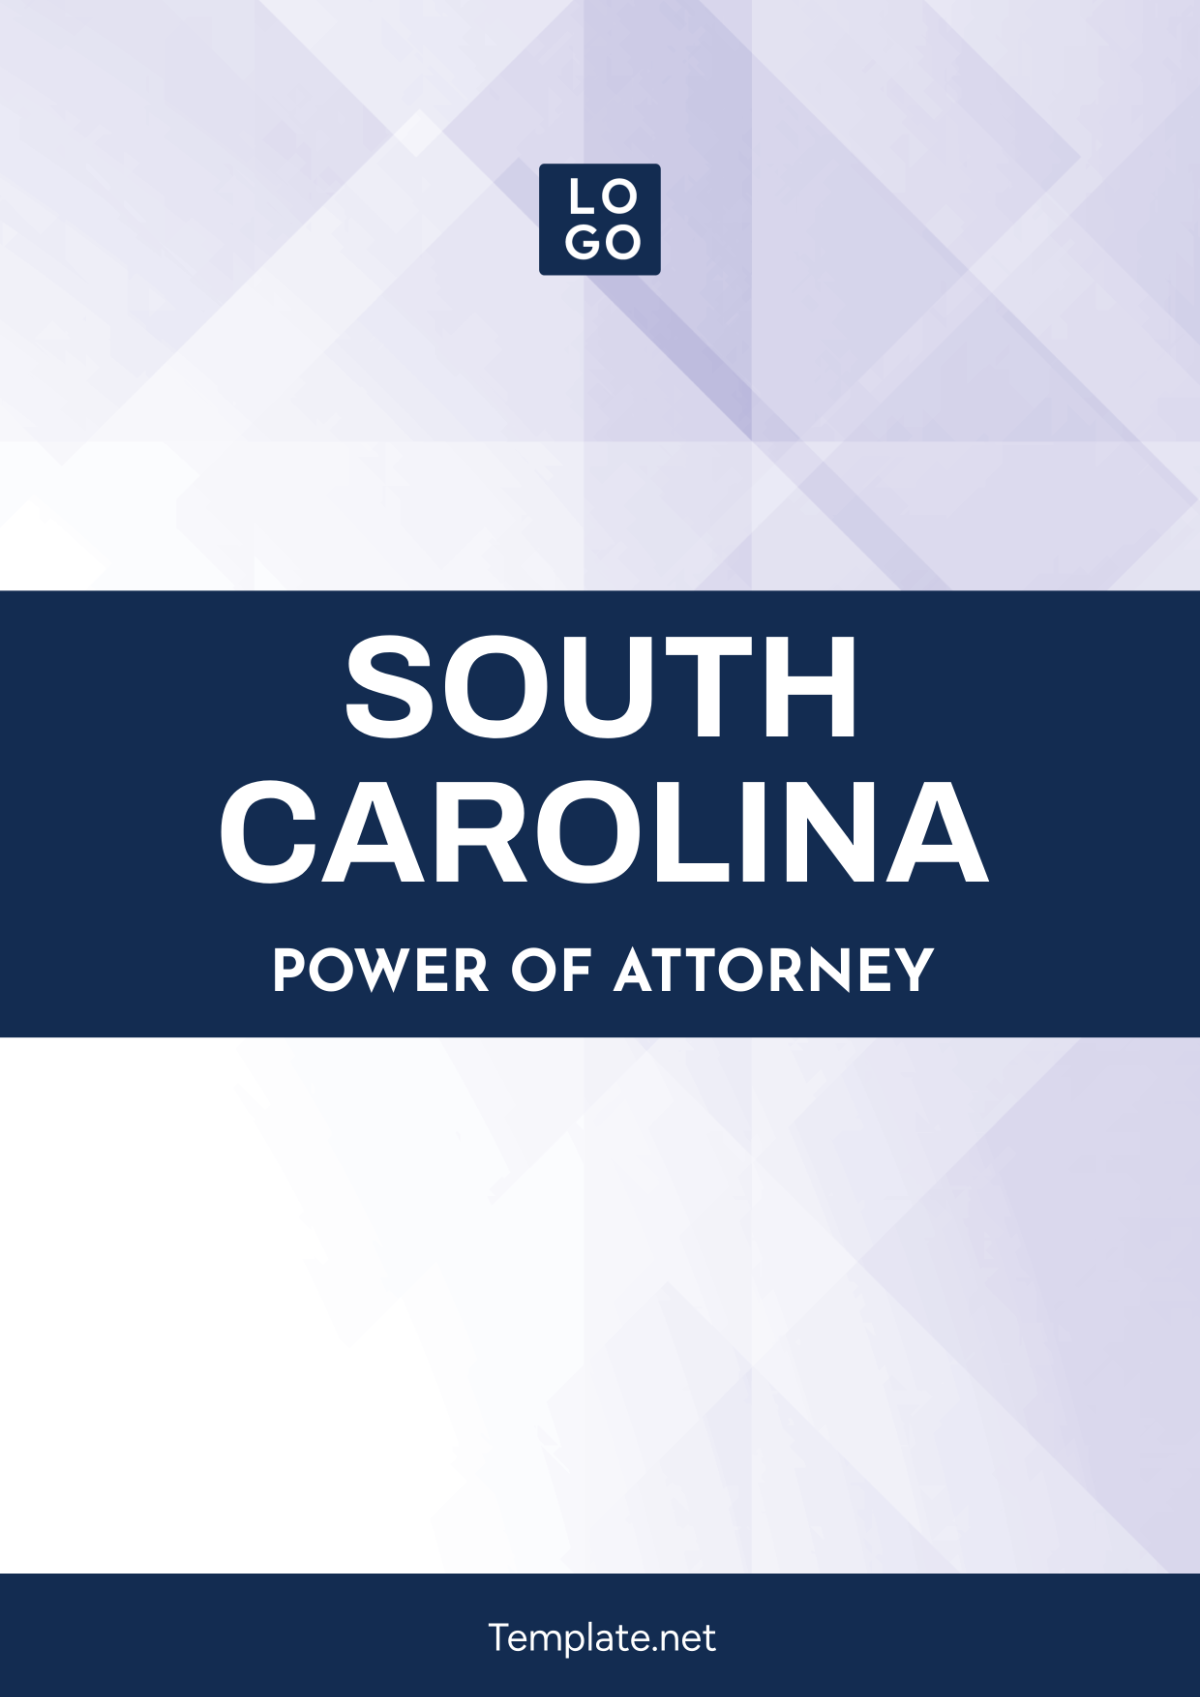 South Carolina Power of Attorney Template